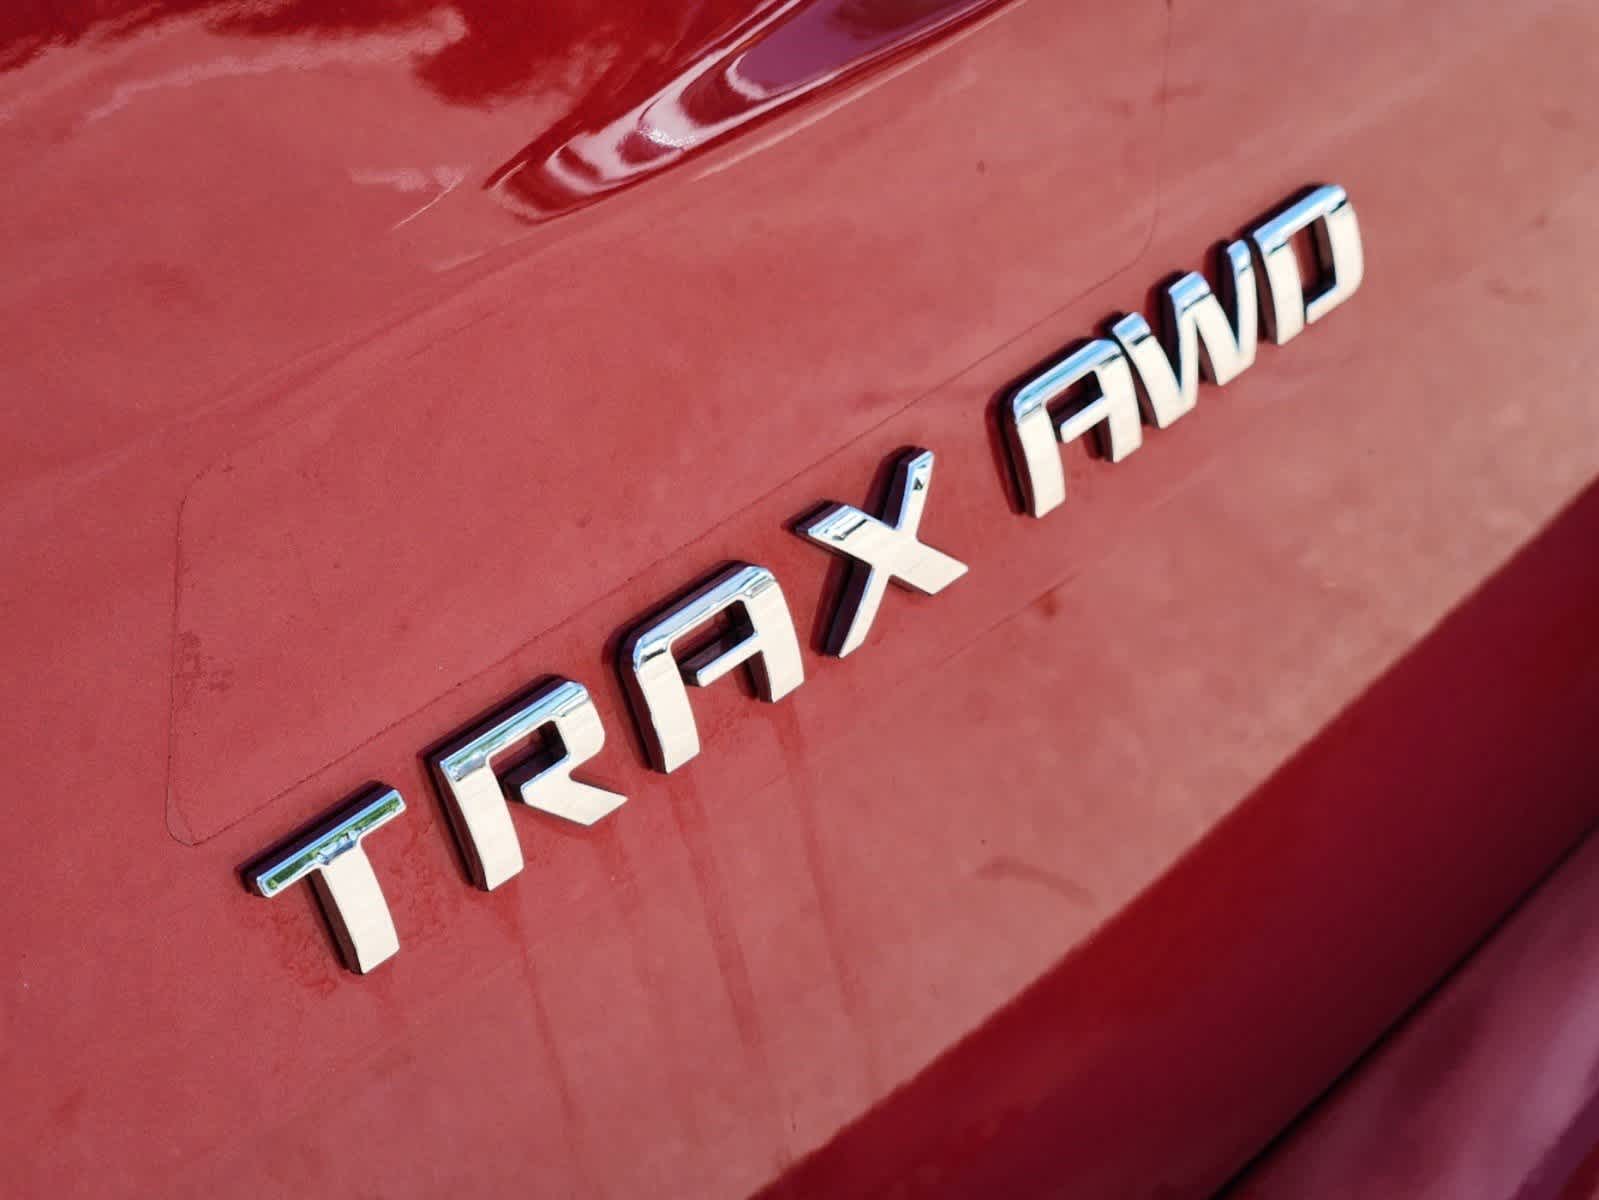 2019 Chevrolet Trax LT 7